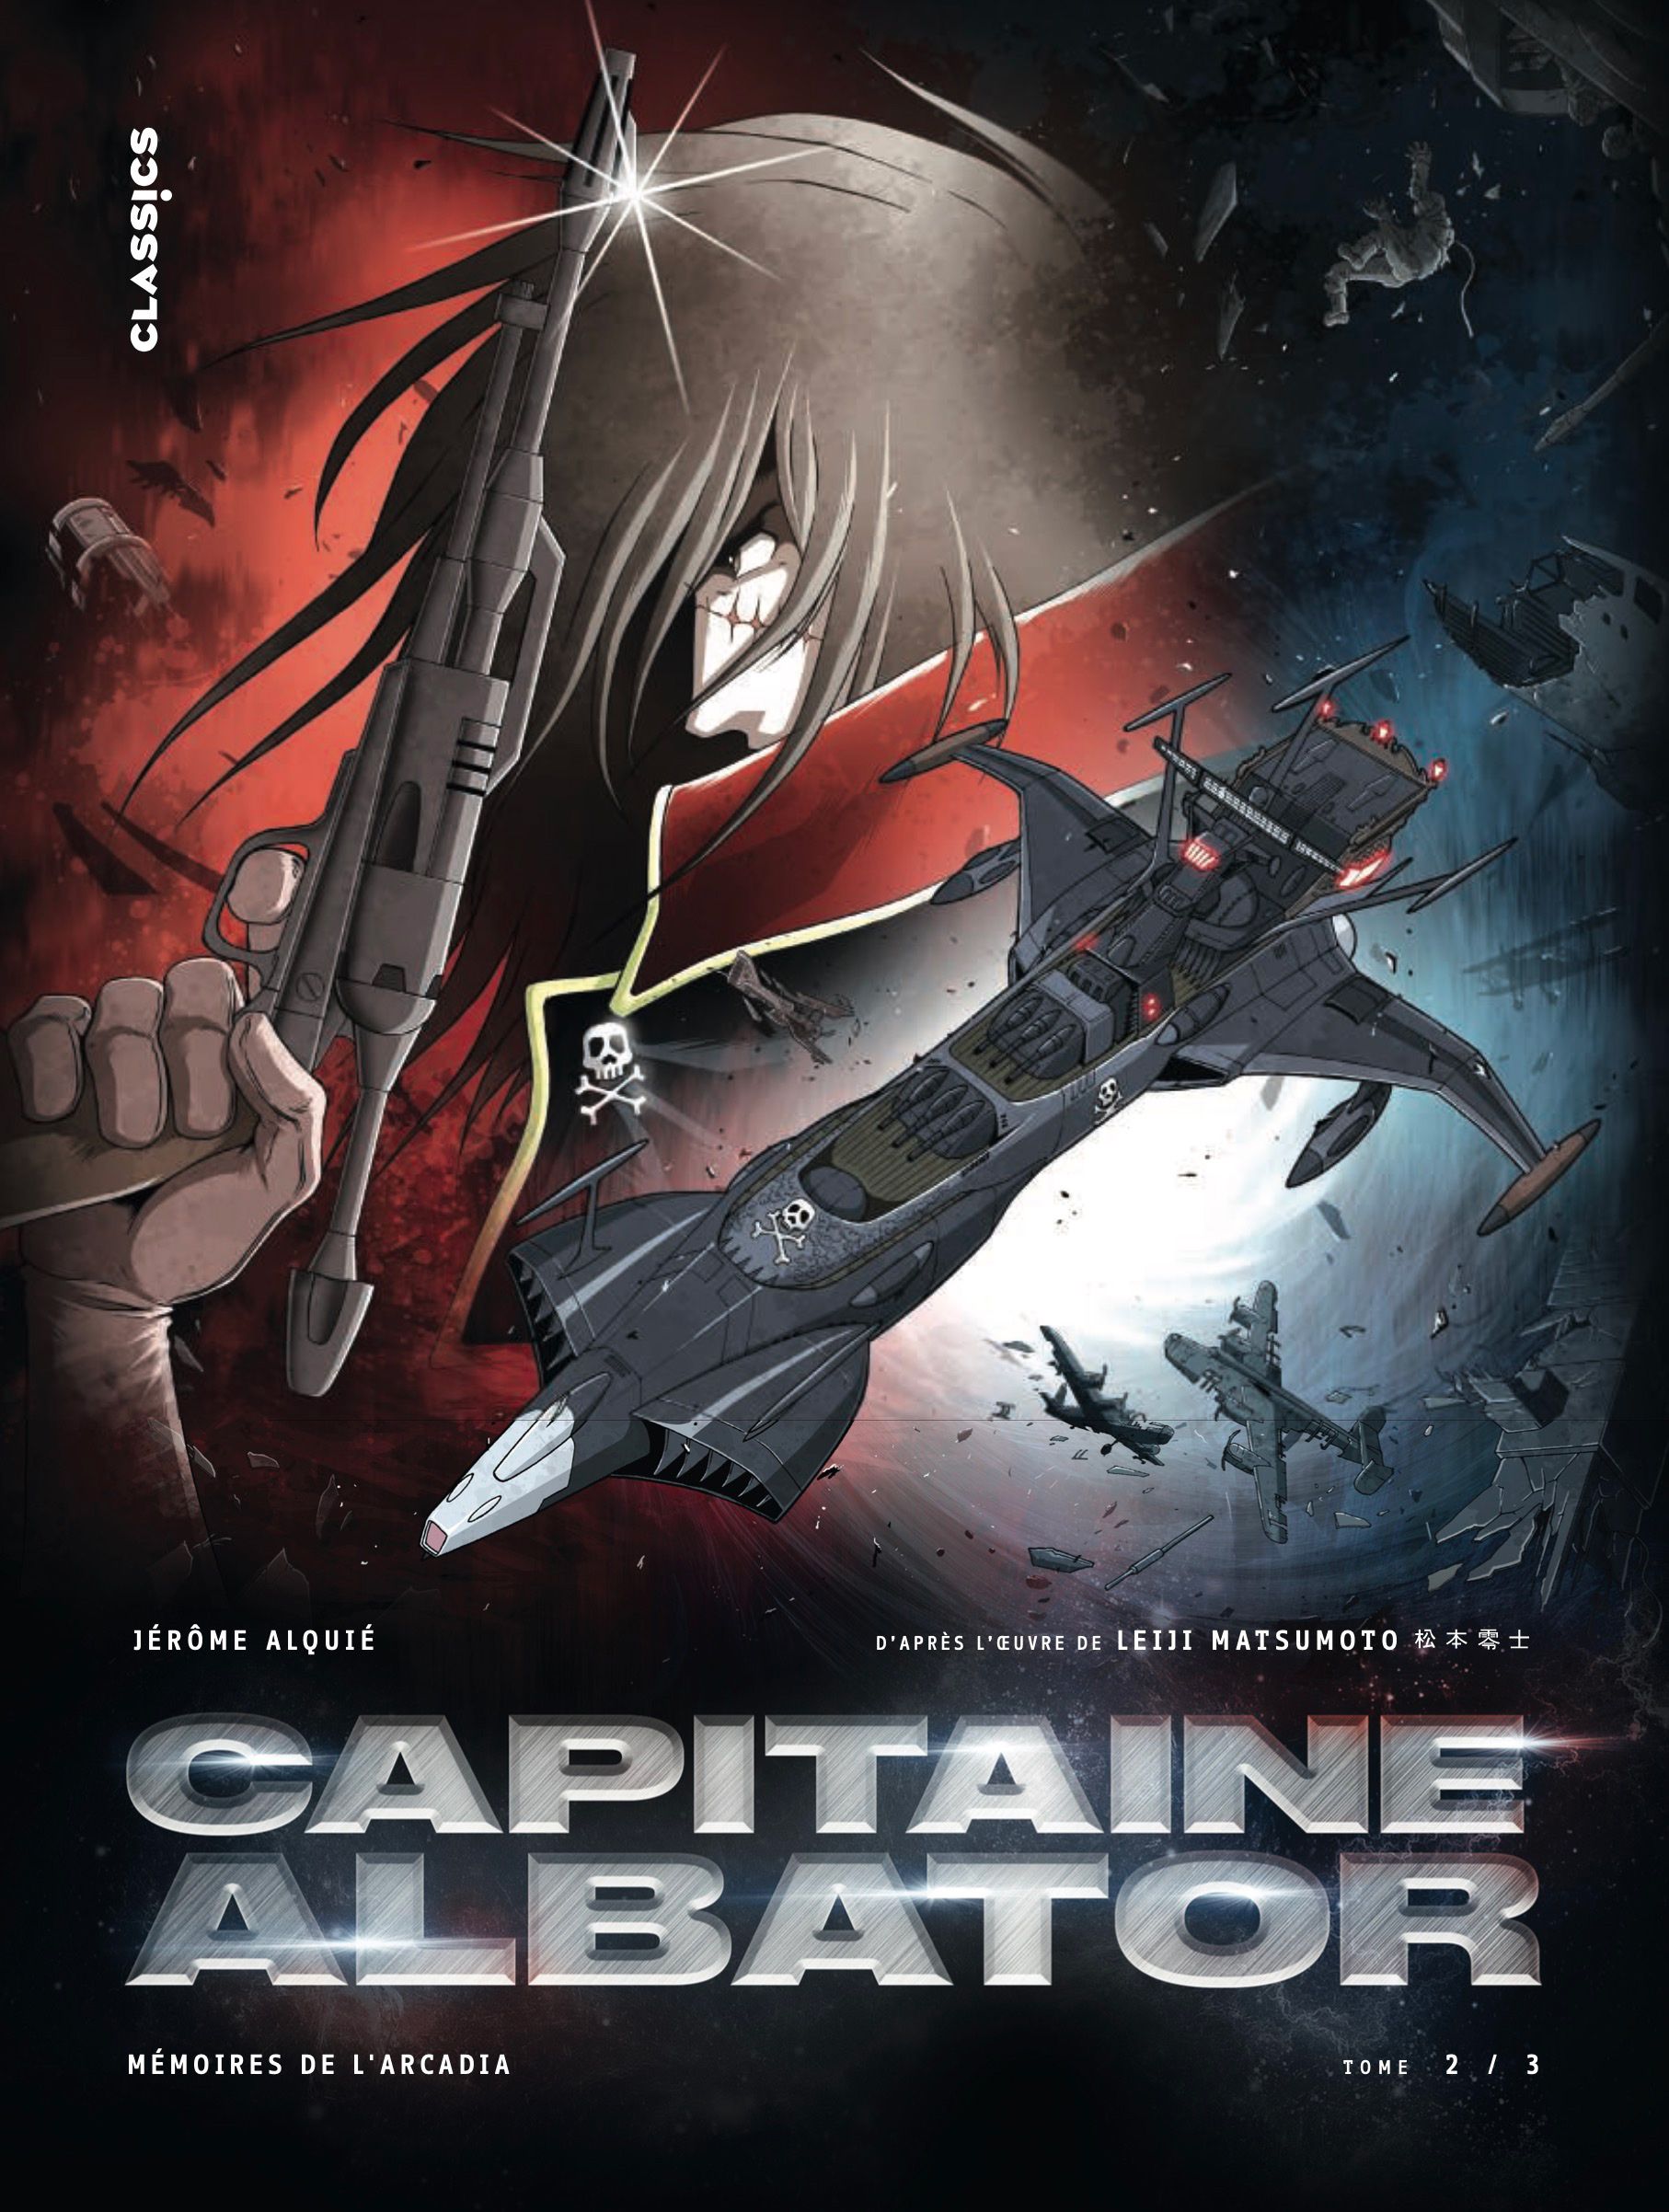 Capitaine Albator - Mémoires de l'Arcadia Vol.2